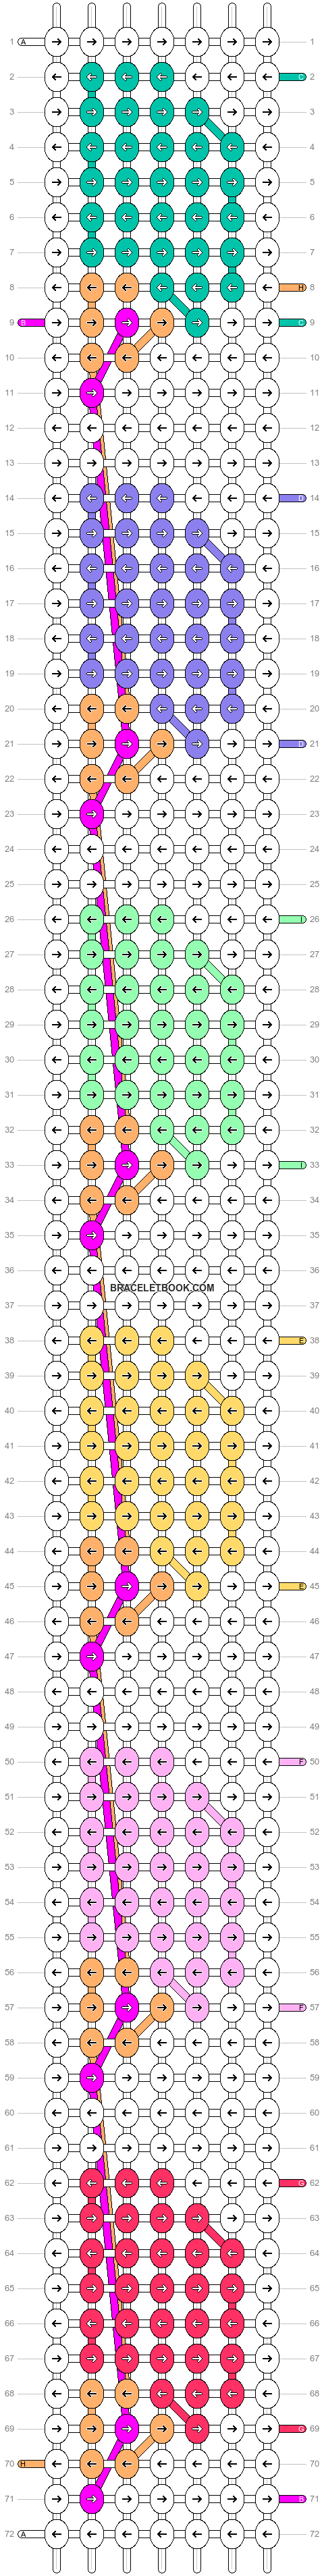 Alpha pattern #34246 variation #30025 pattern